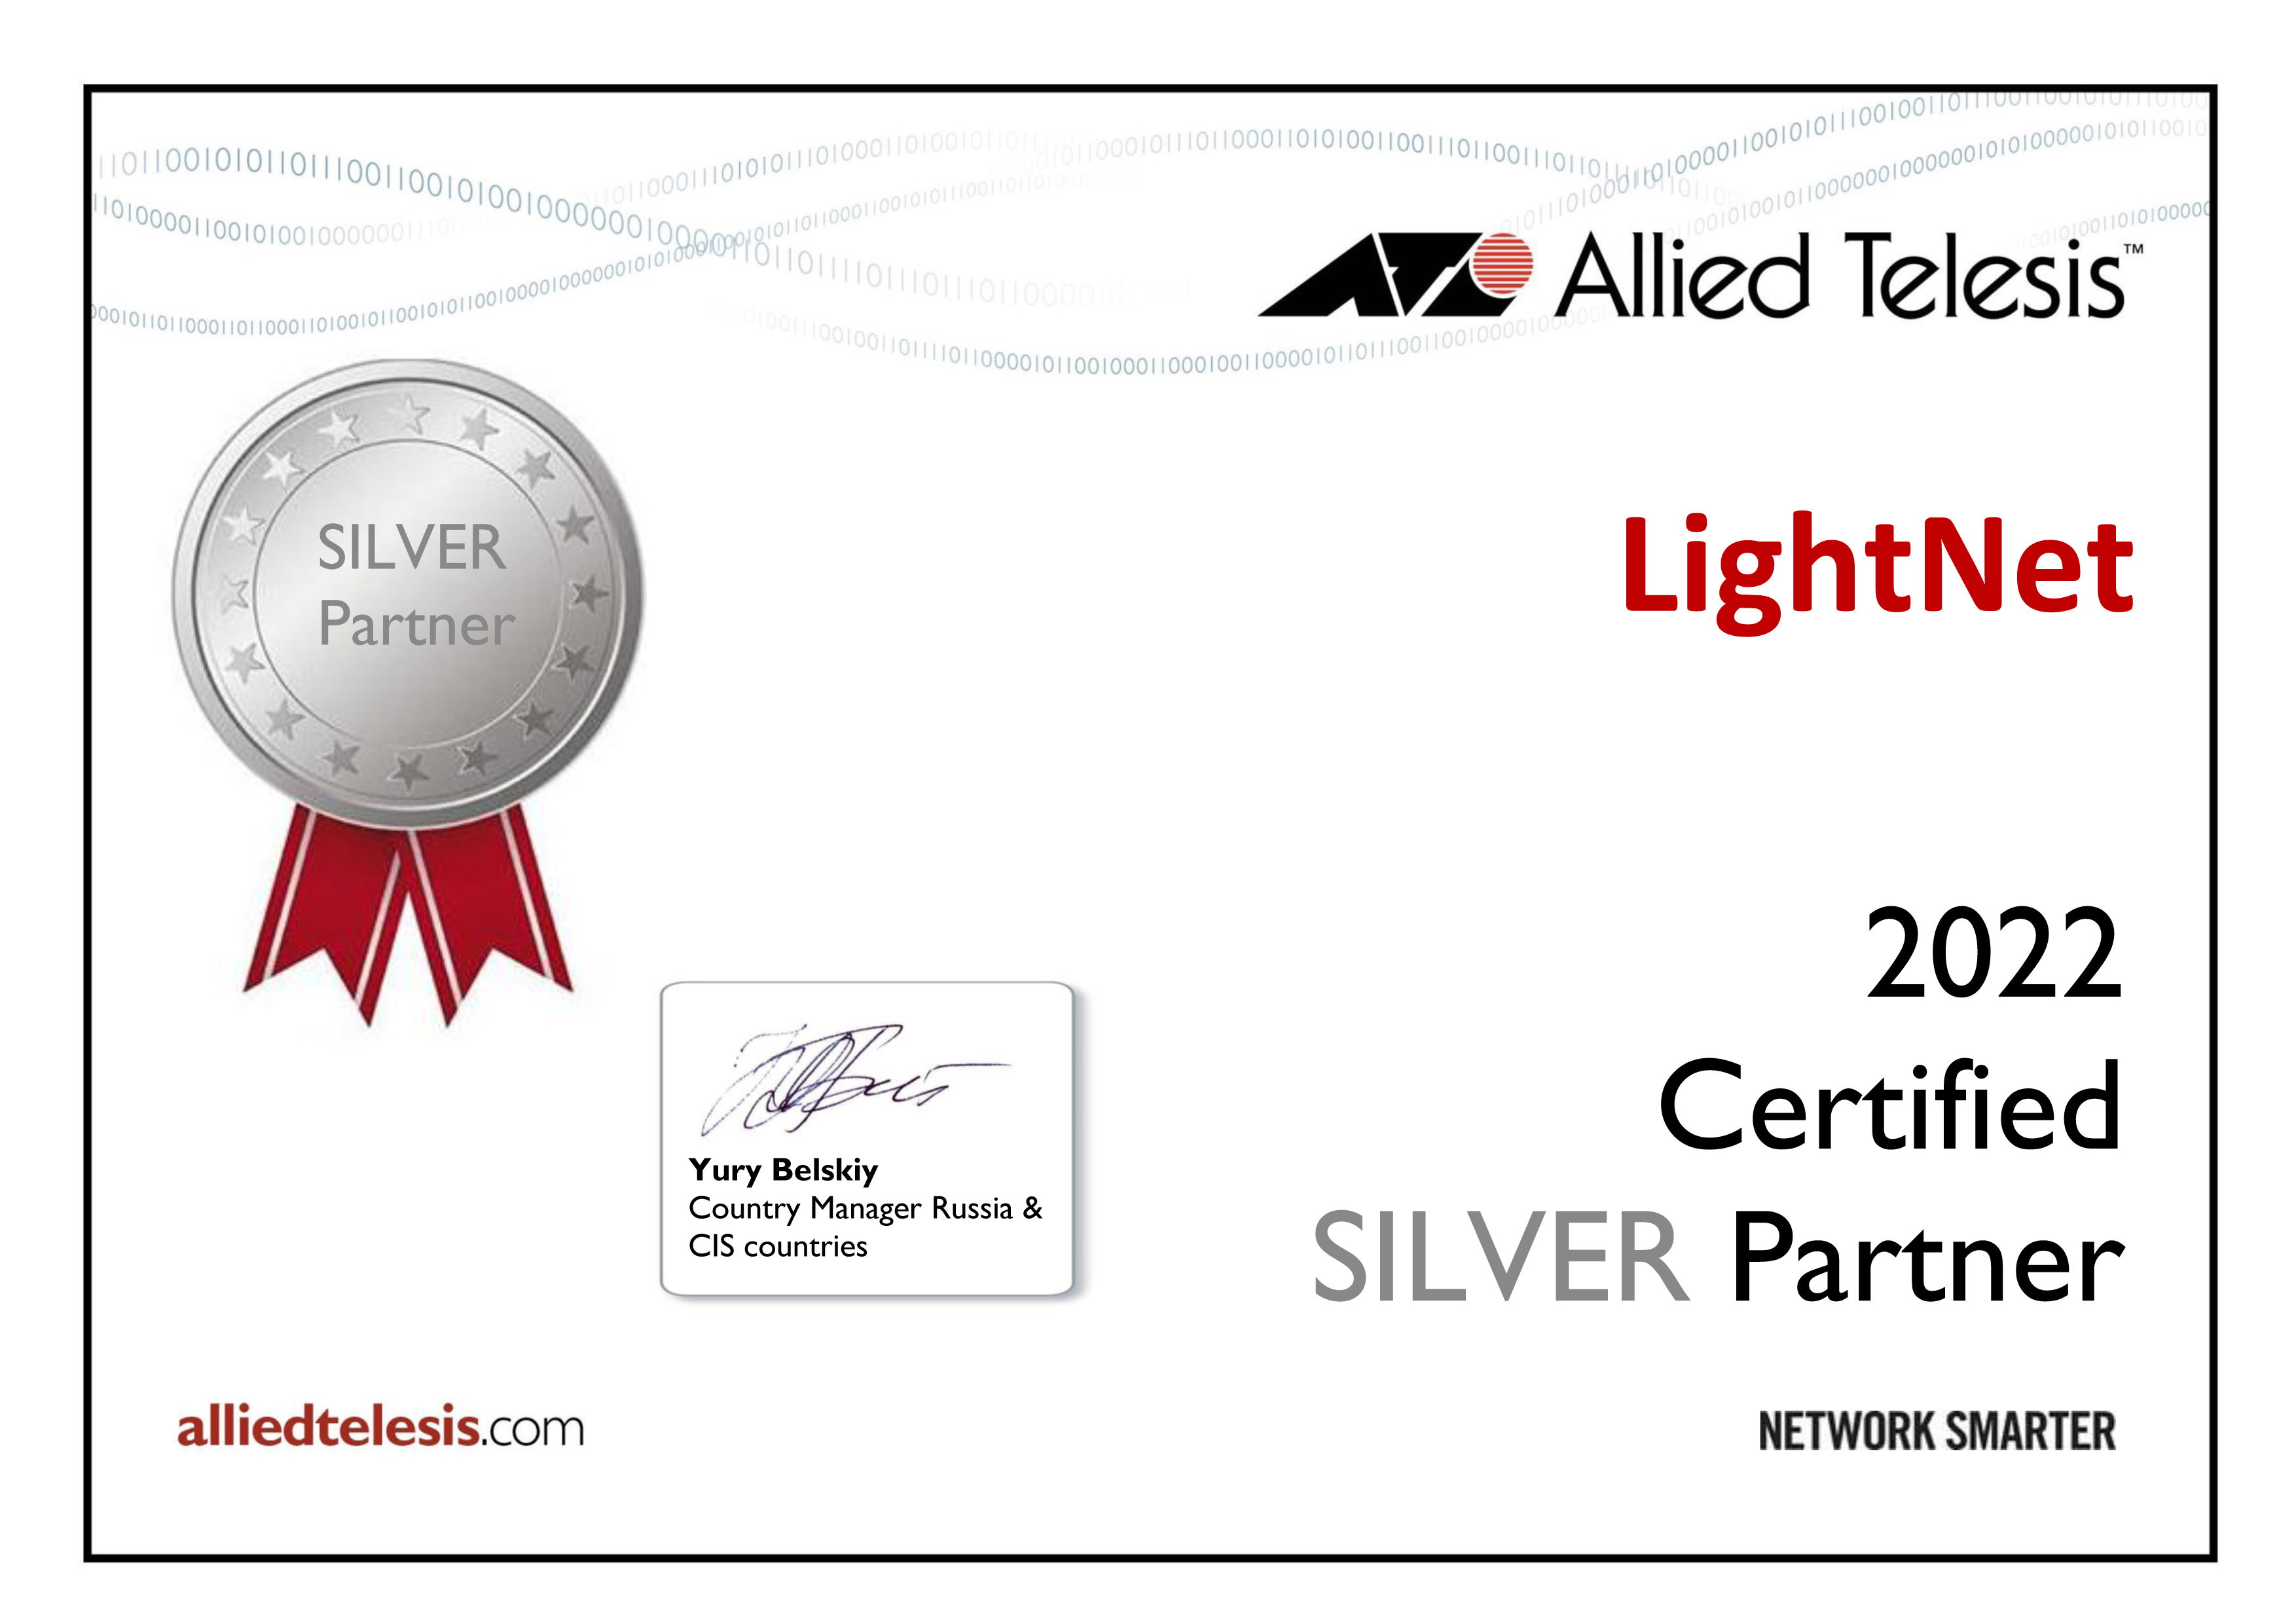 Allied Telesis - Certified Silver Partner